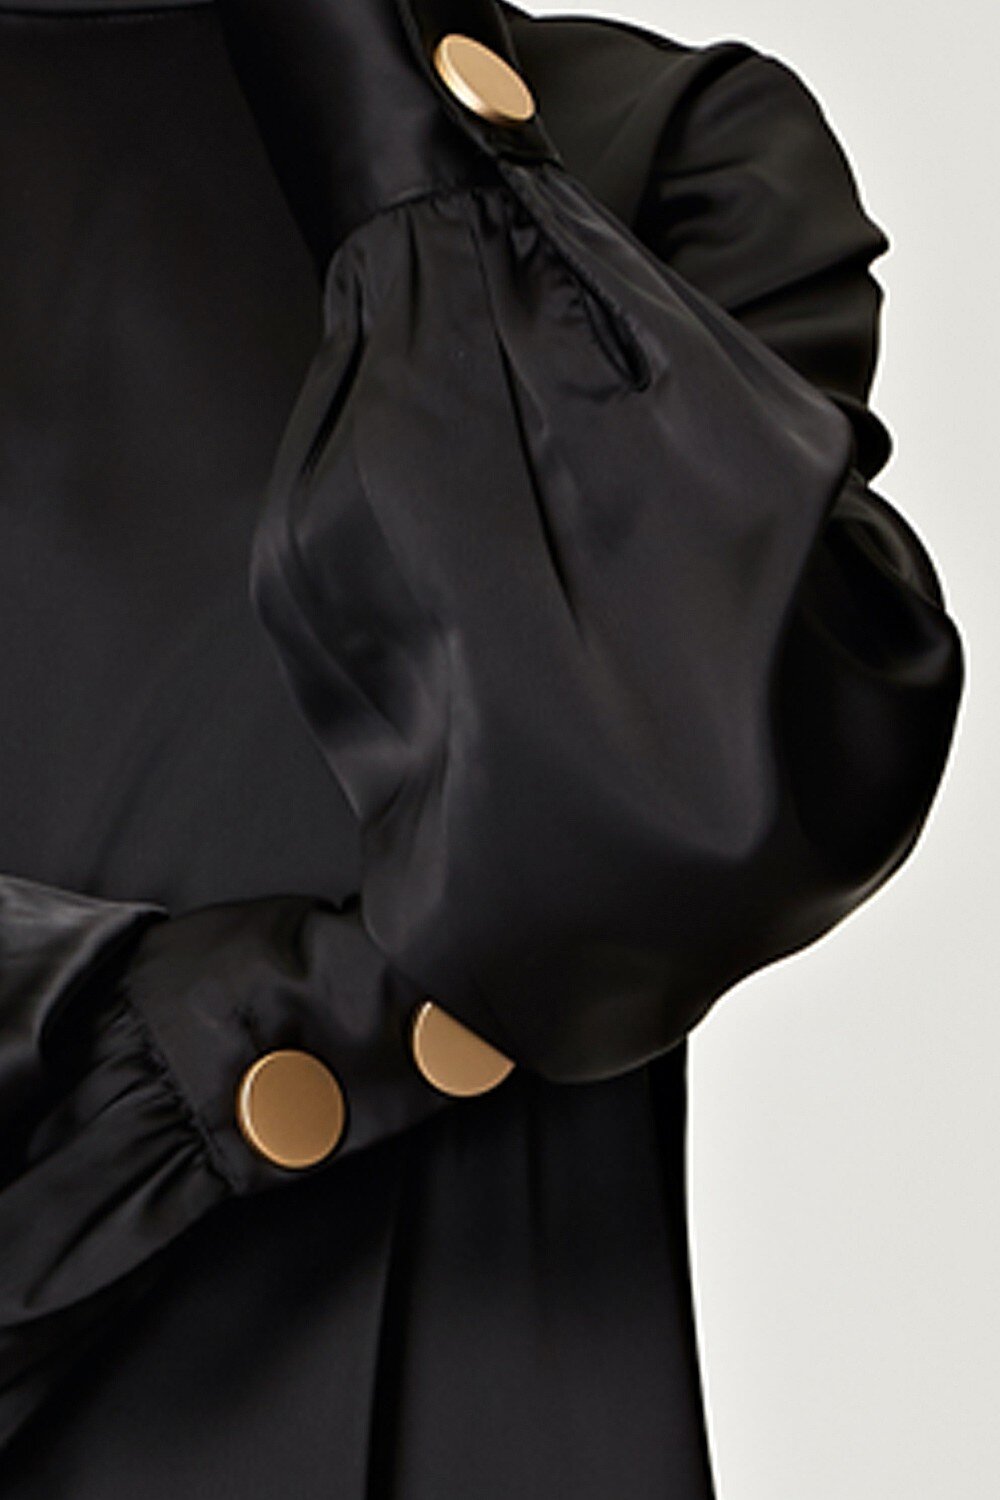 Angeleye Black Satin Dress Size S - DDBooski Clothing Co